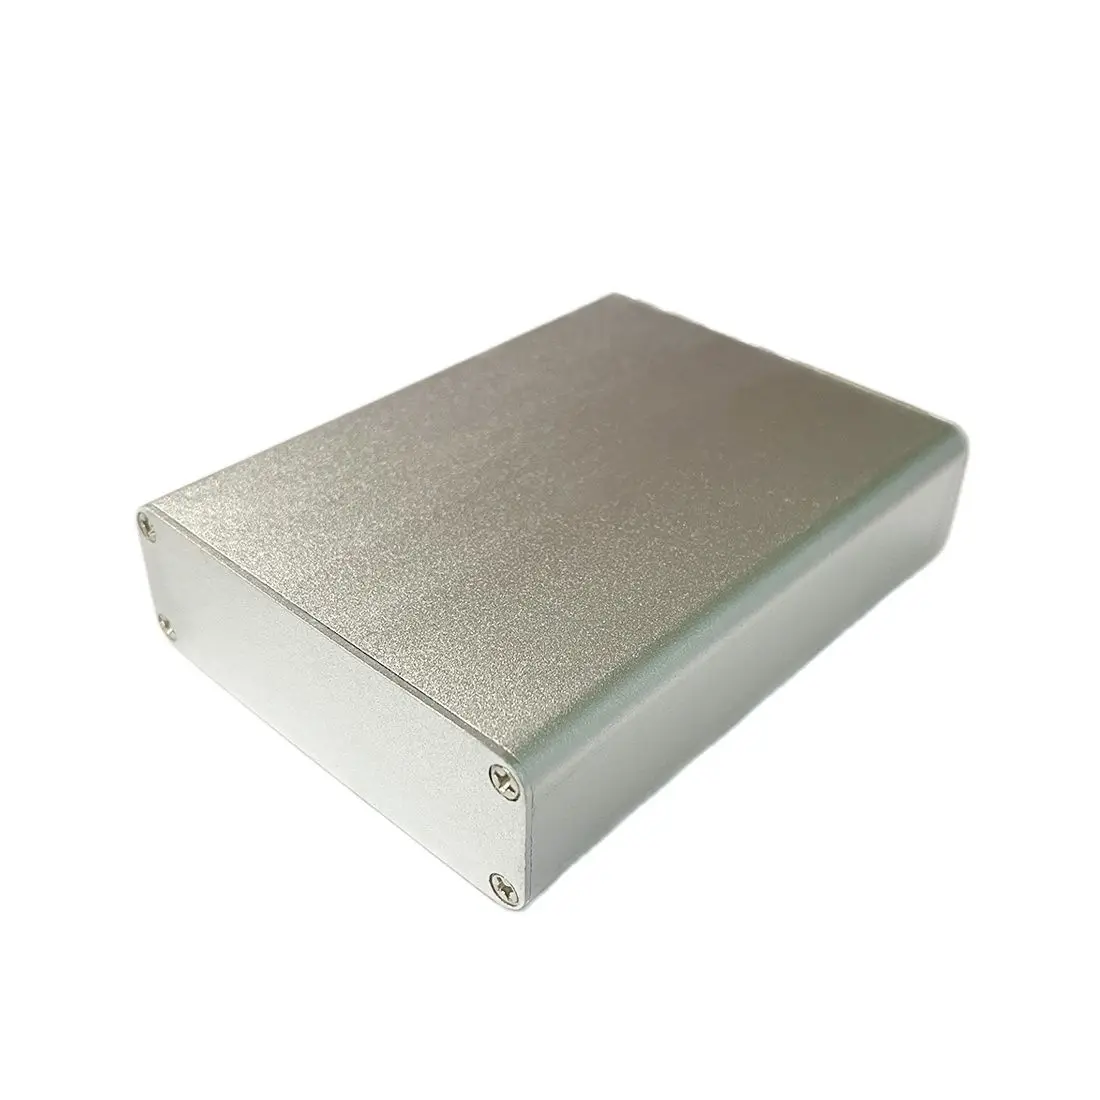 Aluminium Enclosure for Electronics, PCB Instrument Shell, Industrial Project Box, DIY, 84x28x110mm